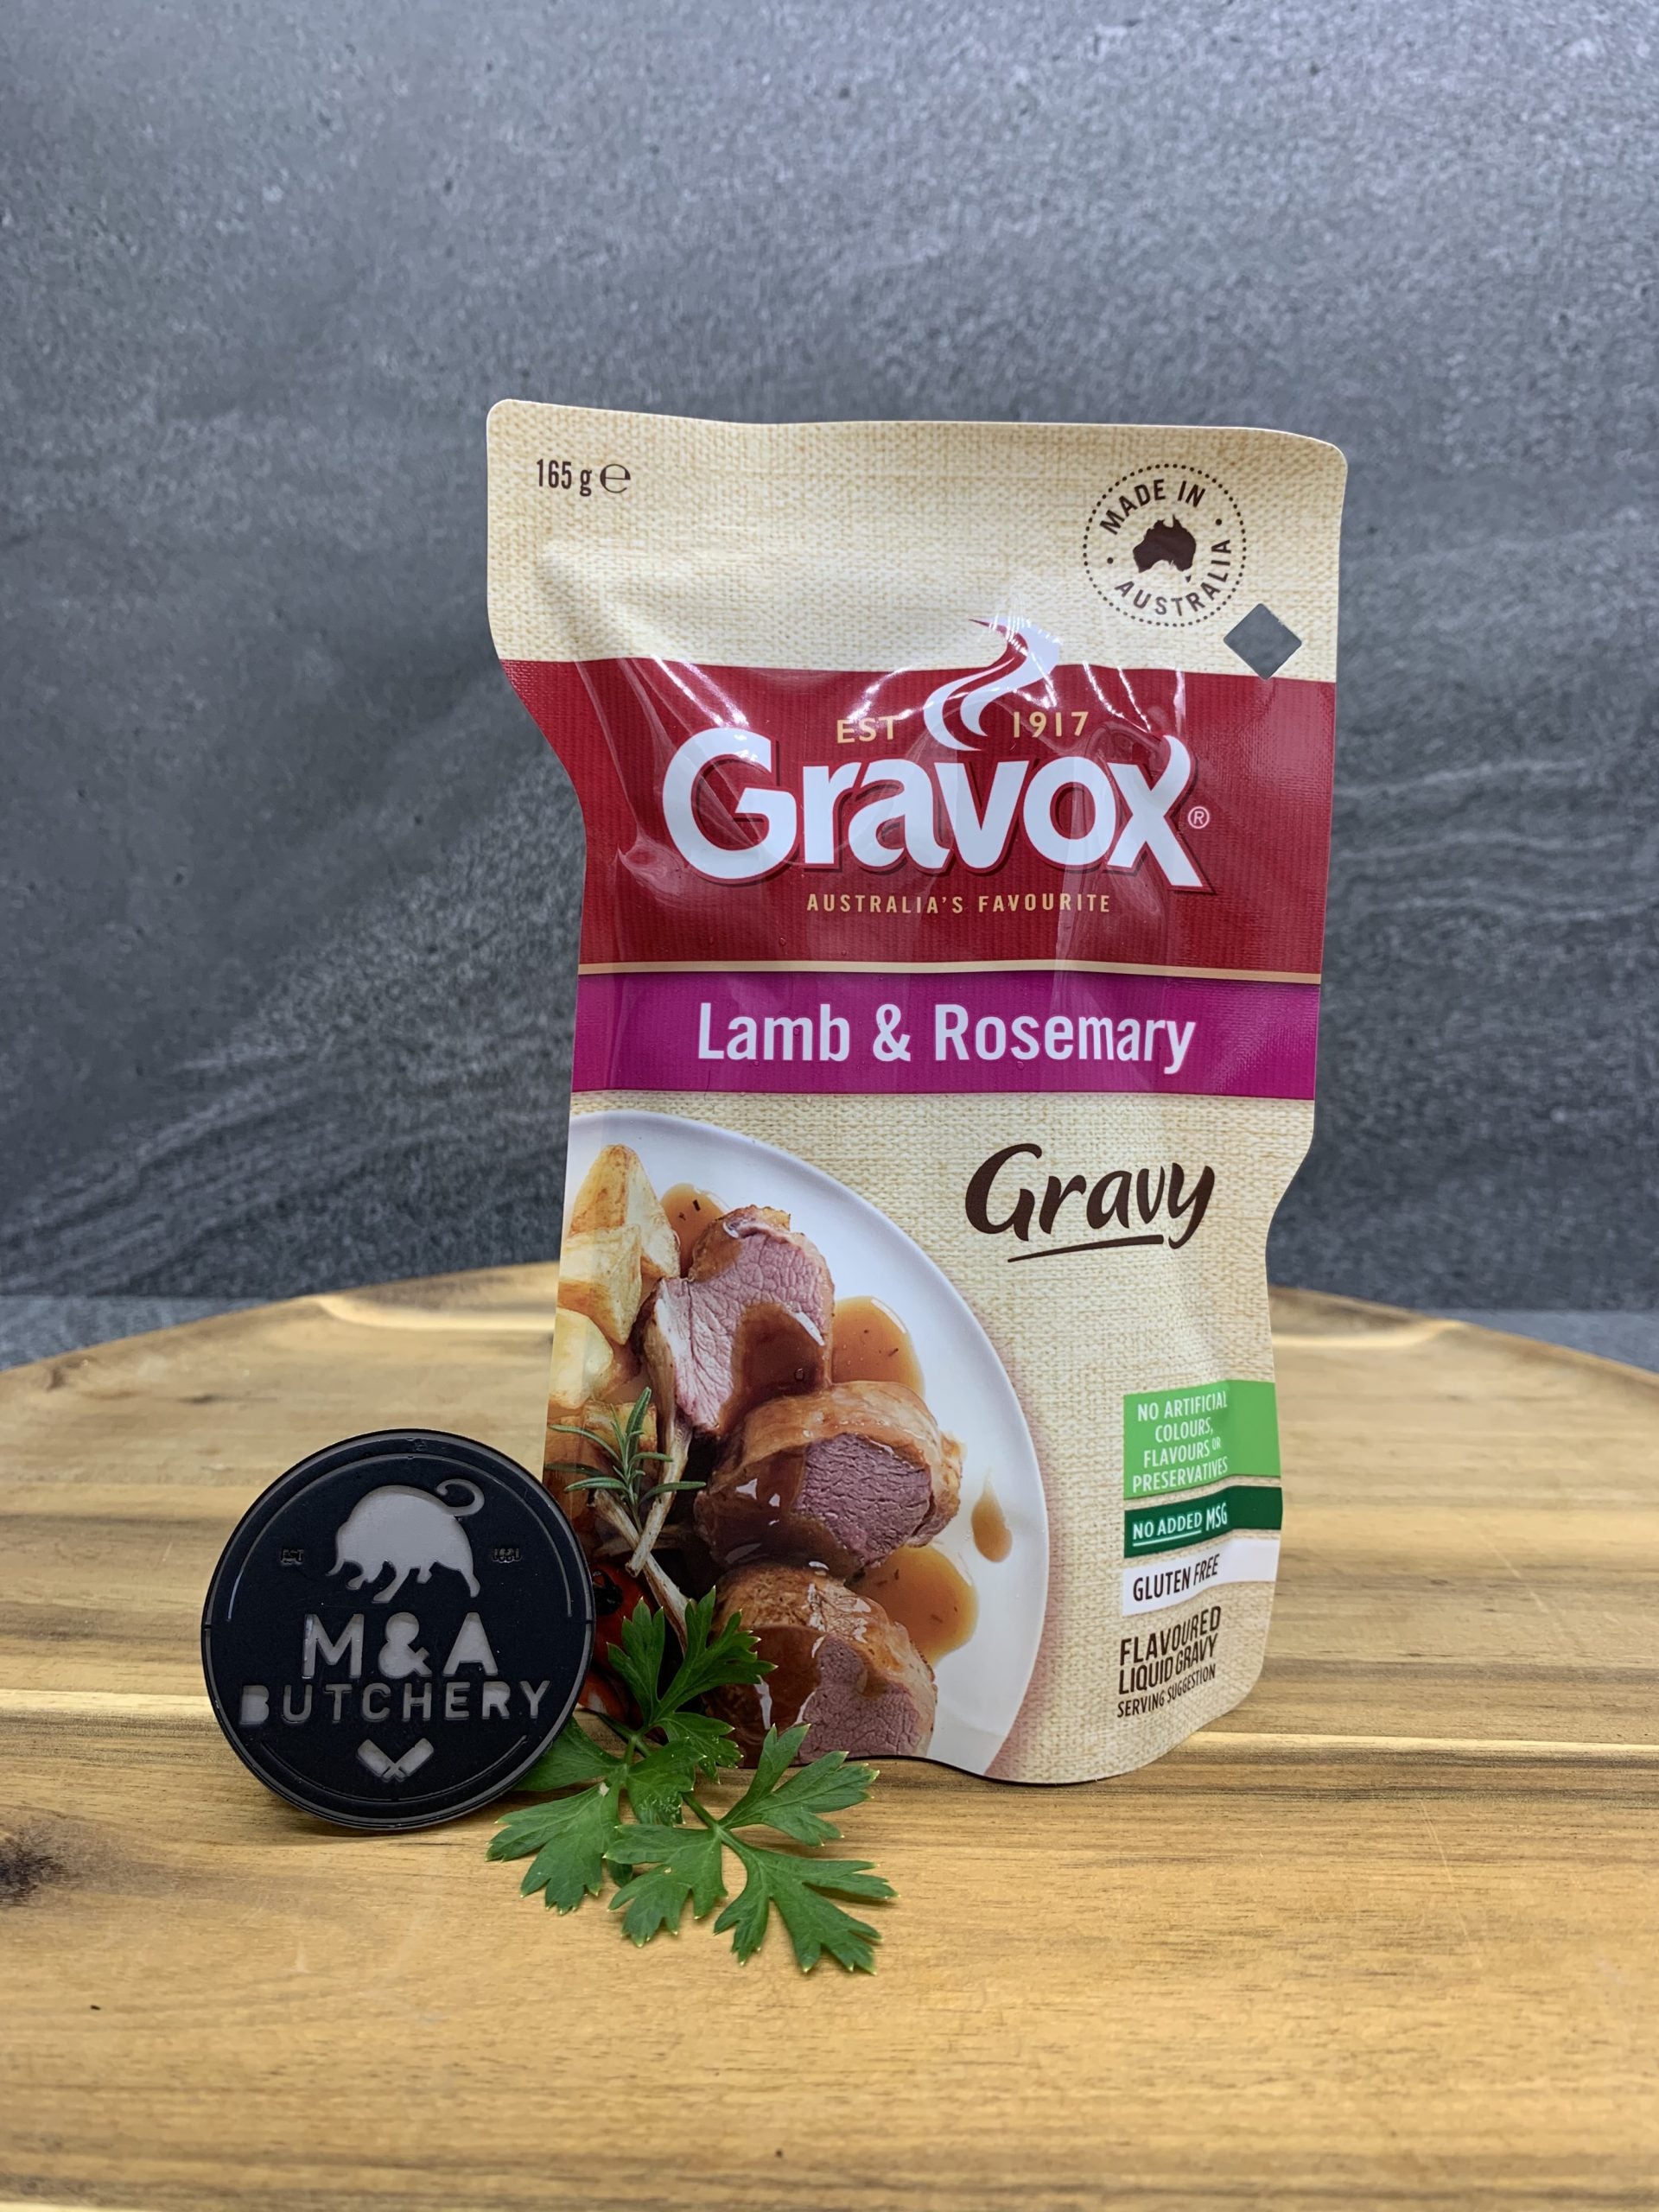 Gravox Lamb and Rosemary Gravy 165g